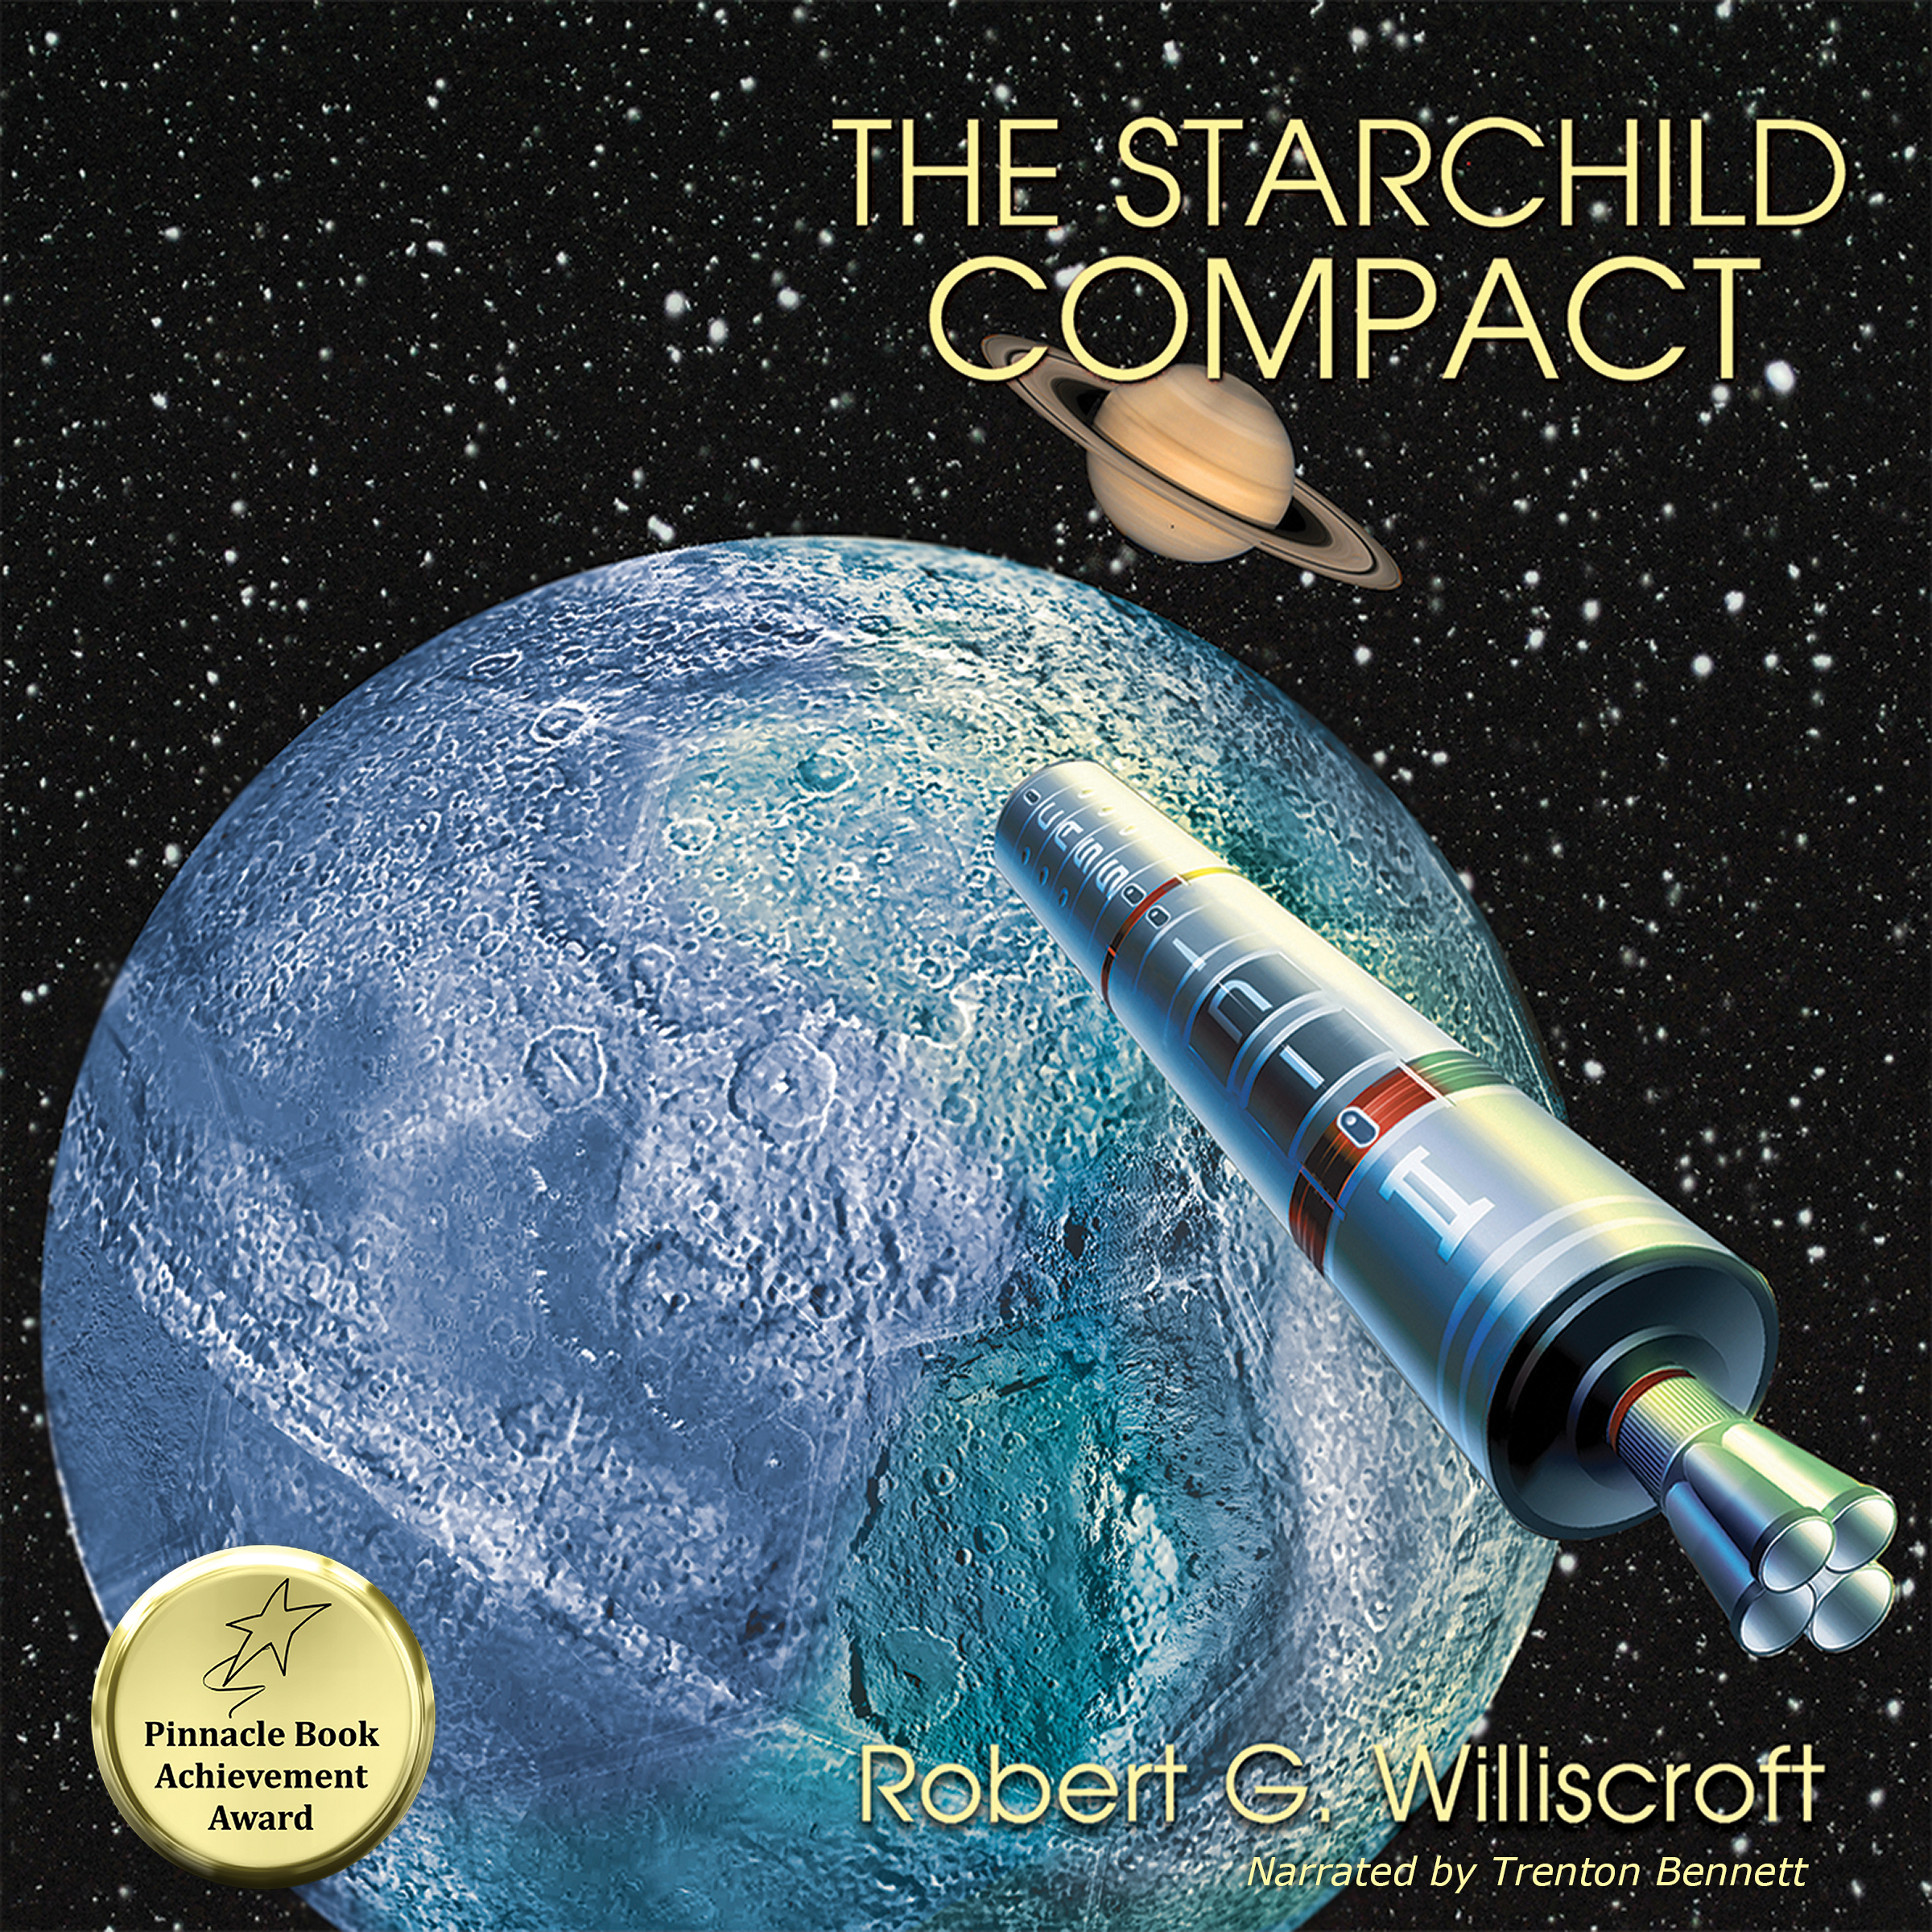 Audiobook Narrator Trenton Bennett promotional trailer for The Starchild Compact on YouTube (video)